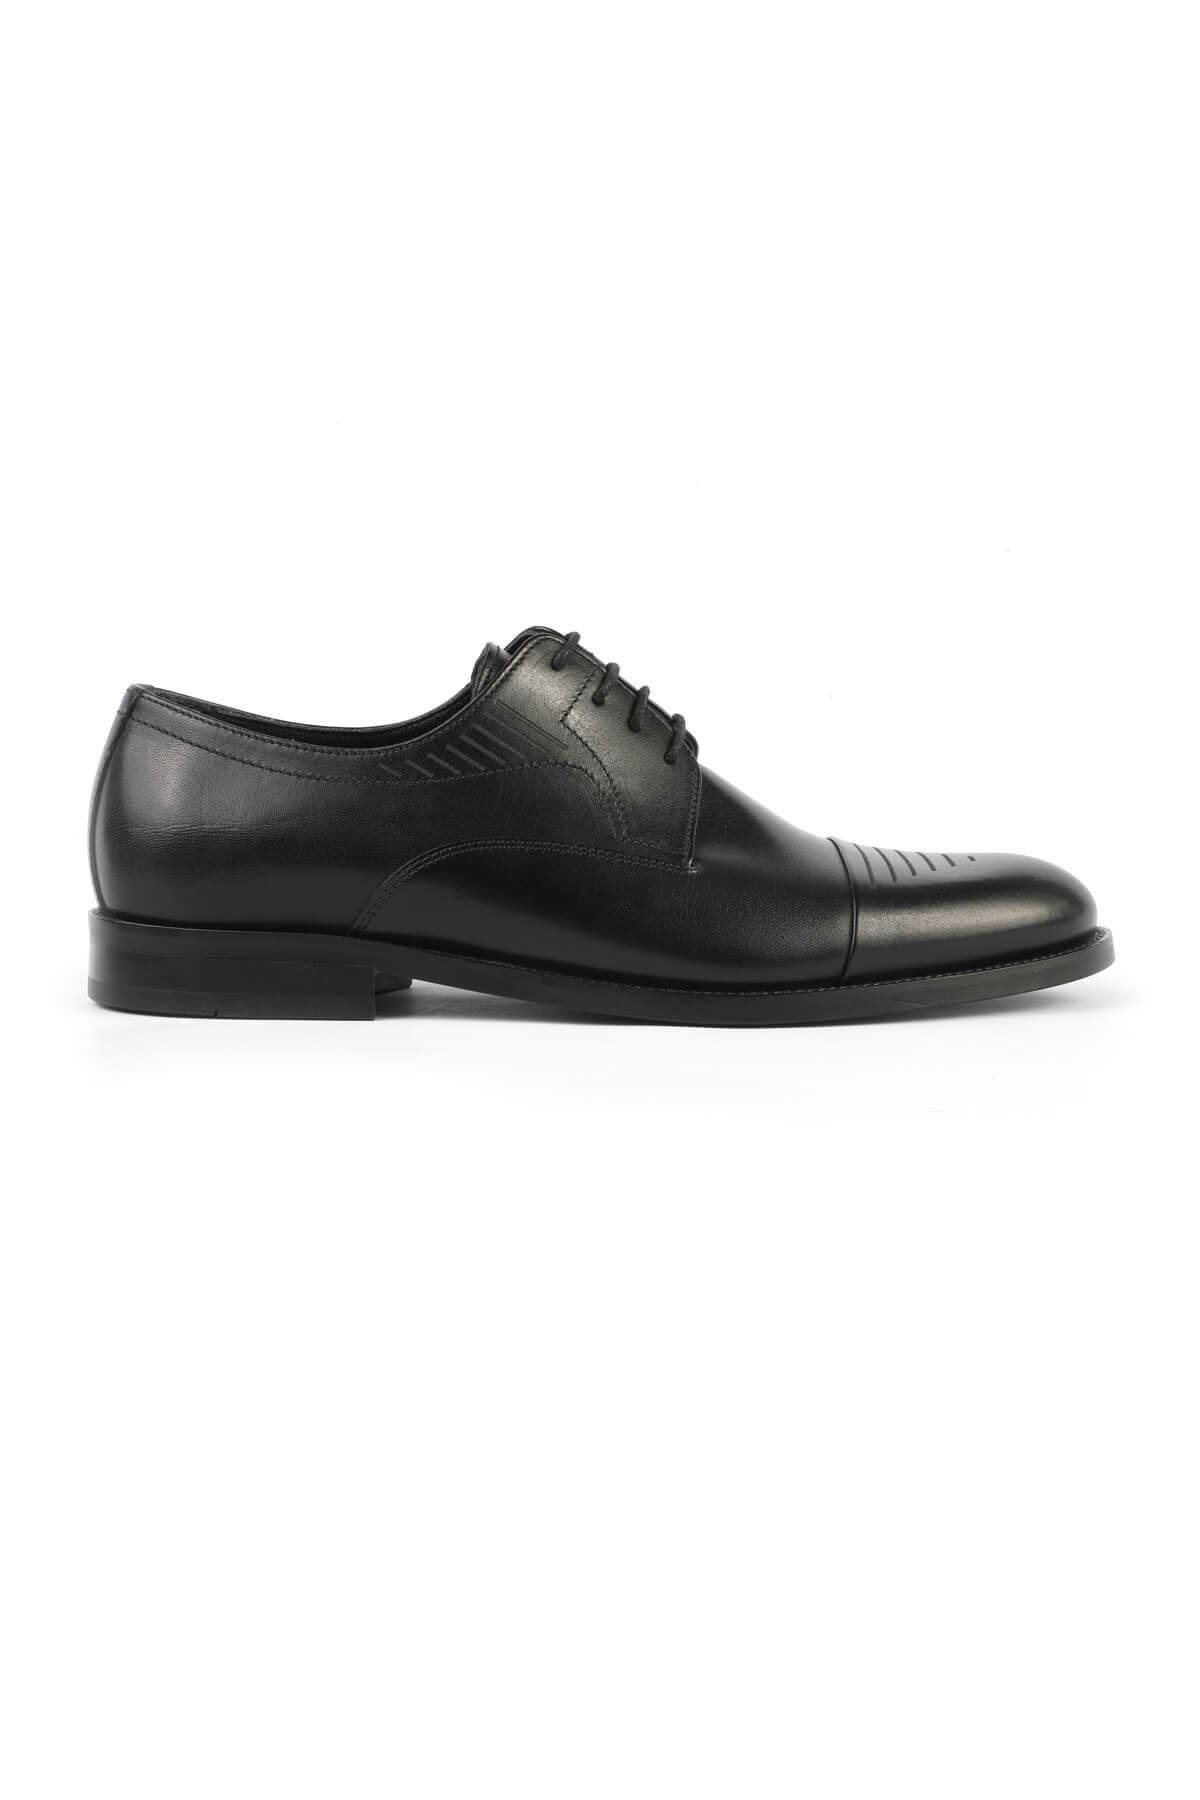 Libero 2776 Black Classic Shoes